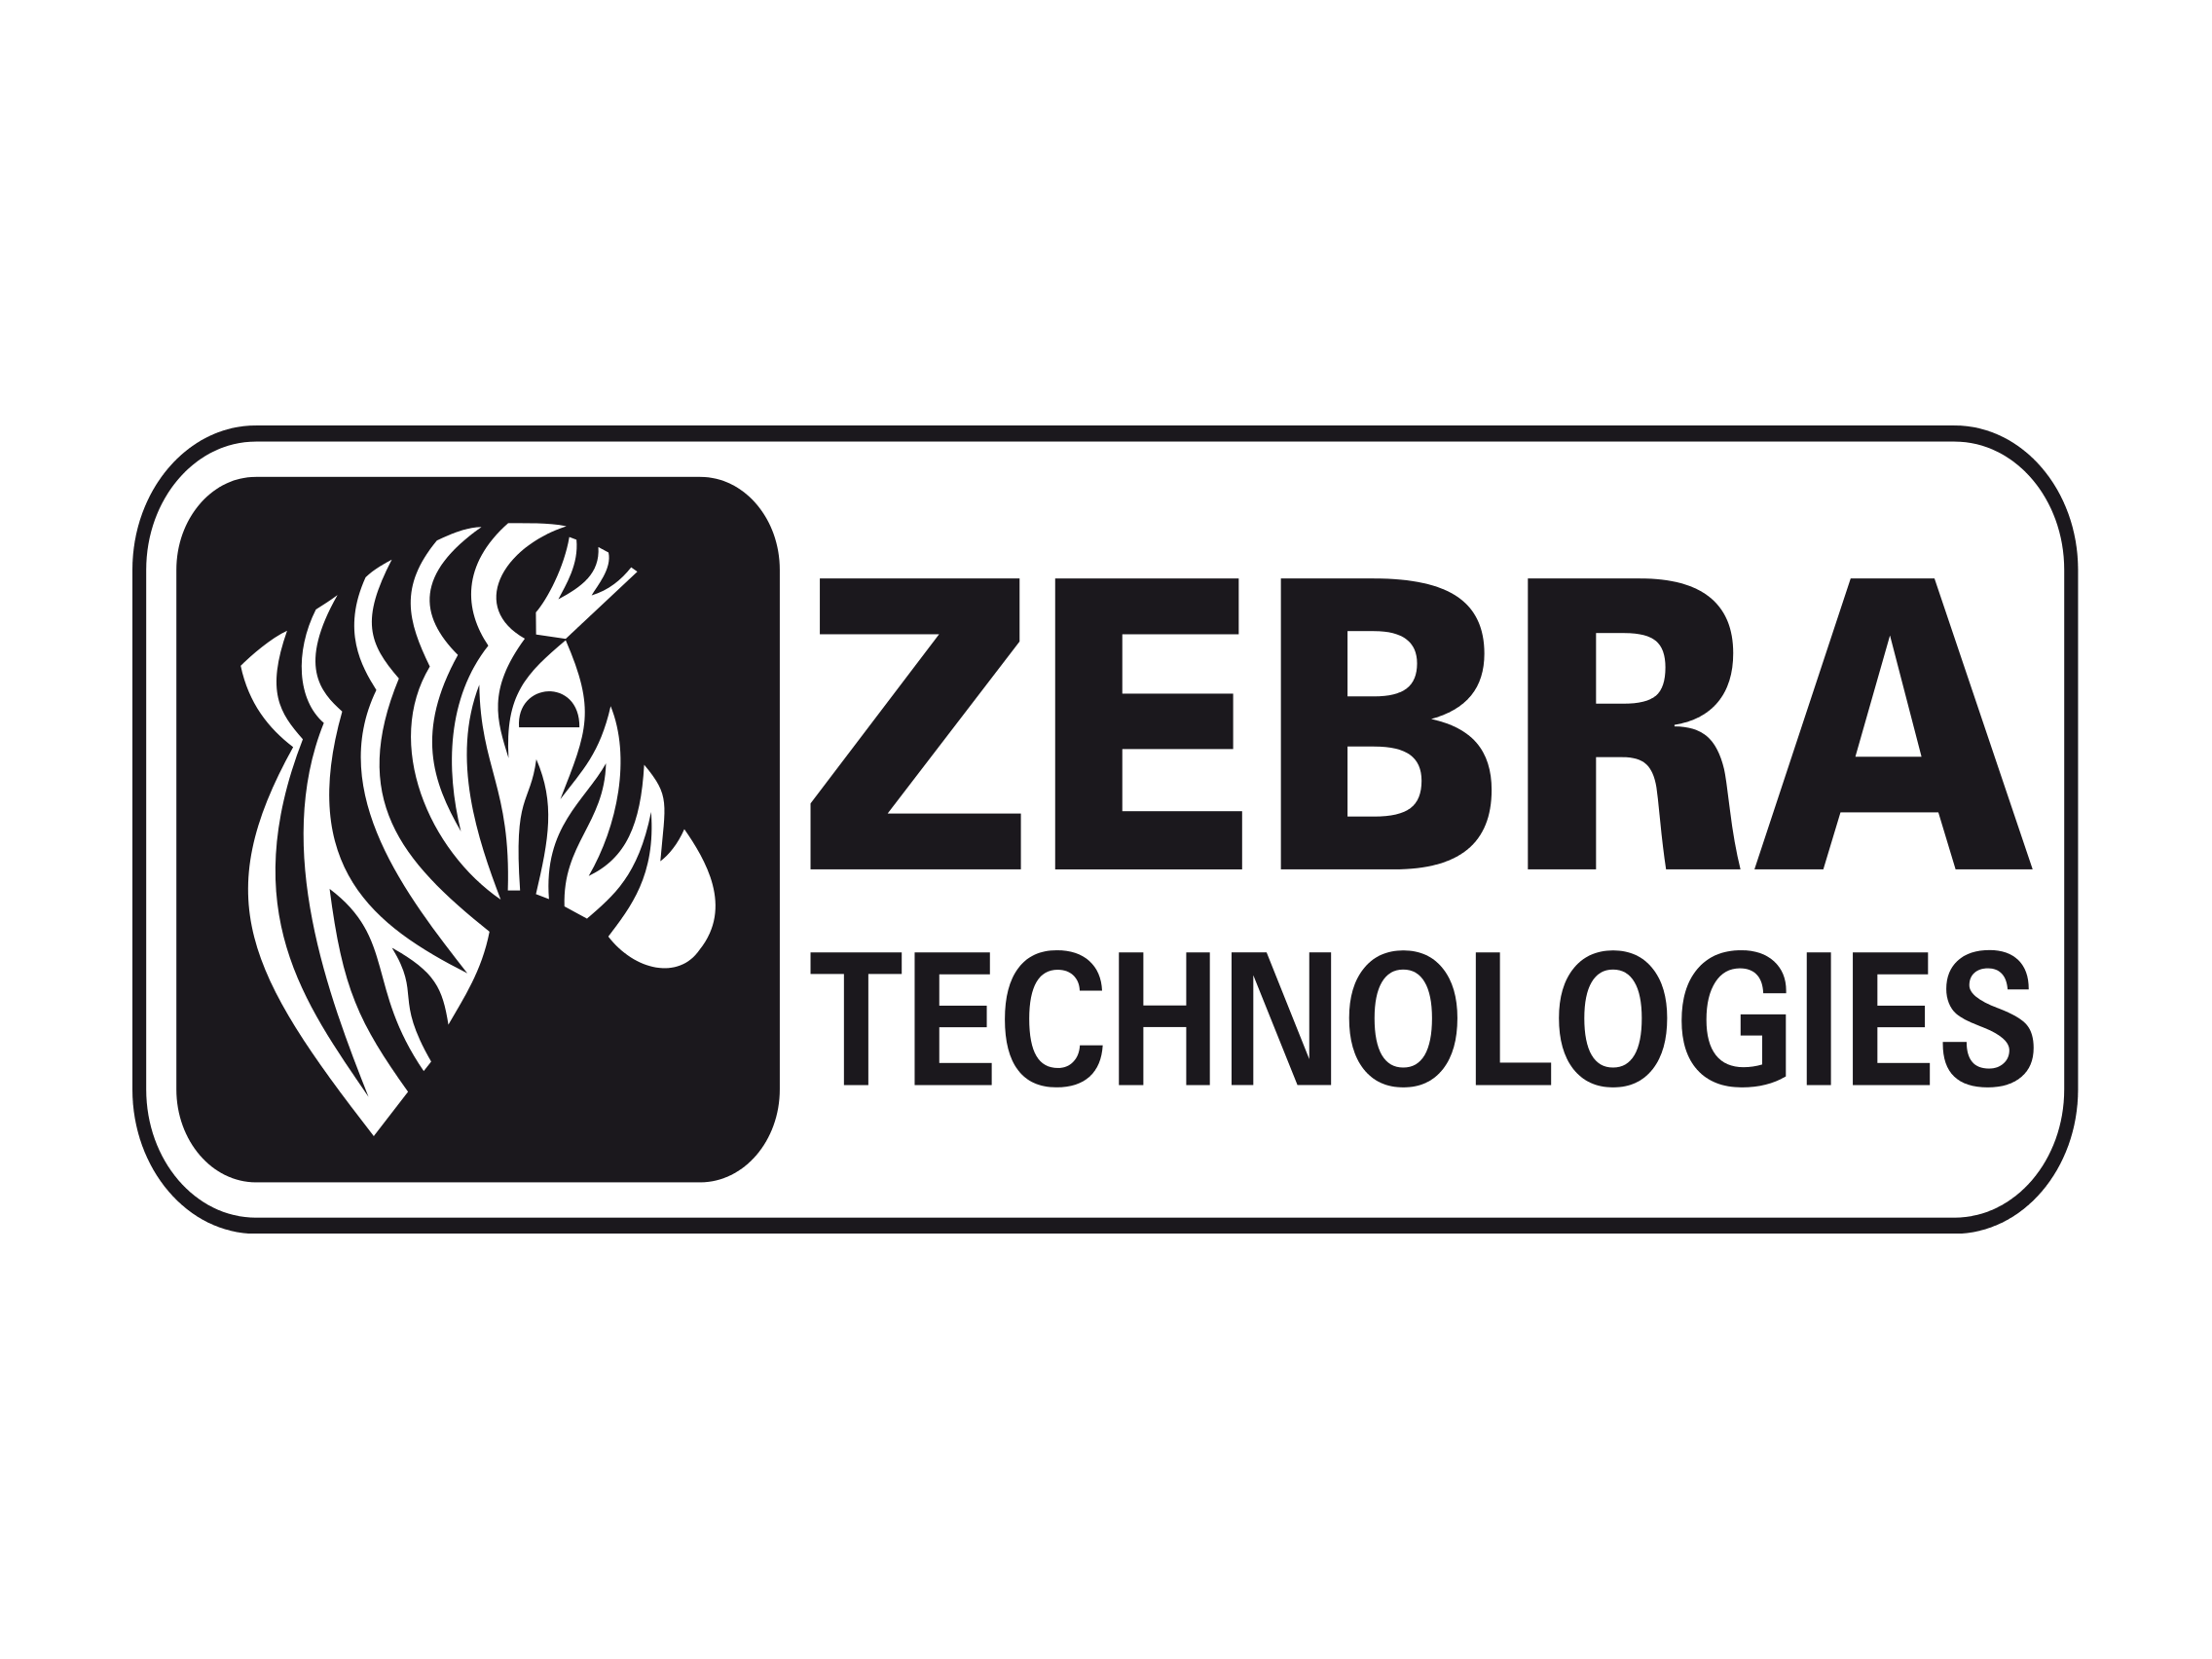 Zebra Logo - Zebra Technologies logo old